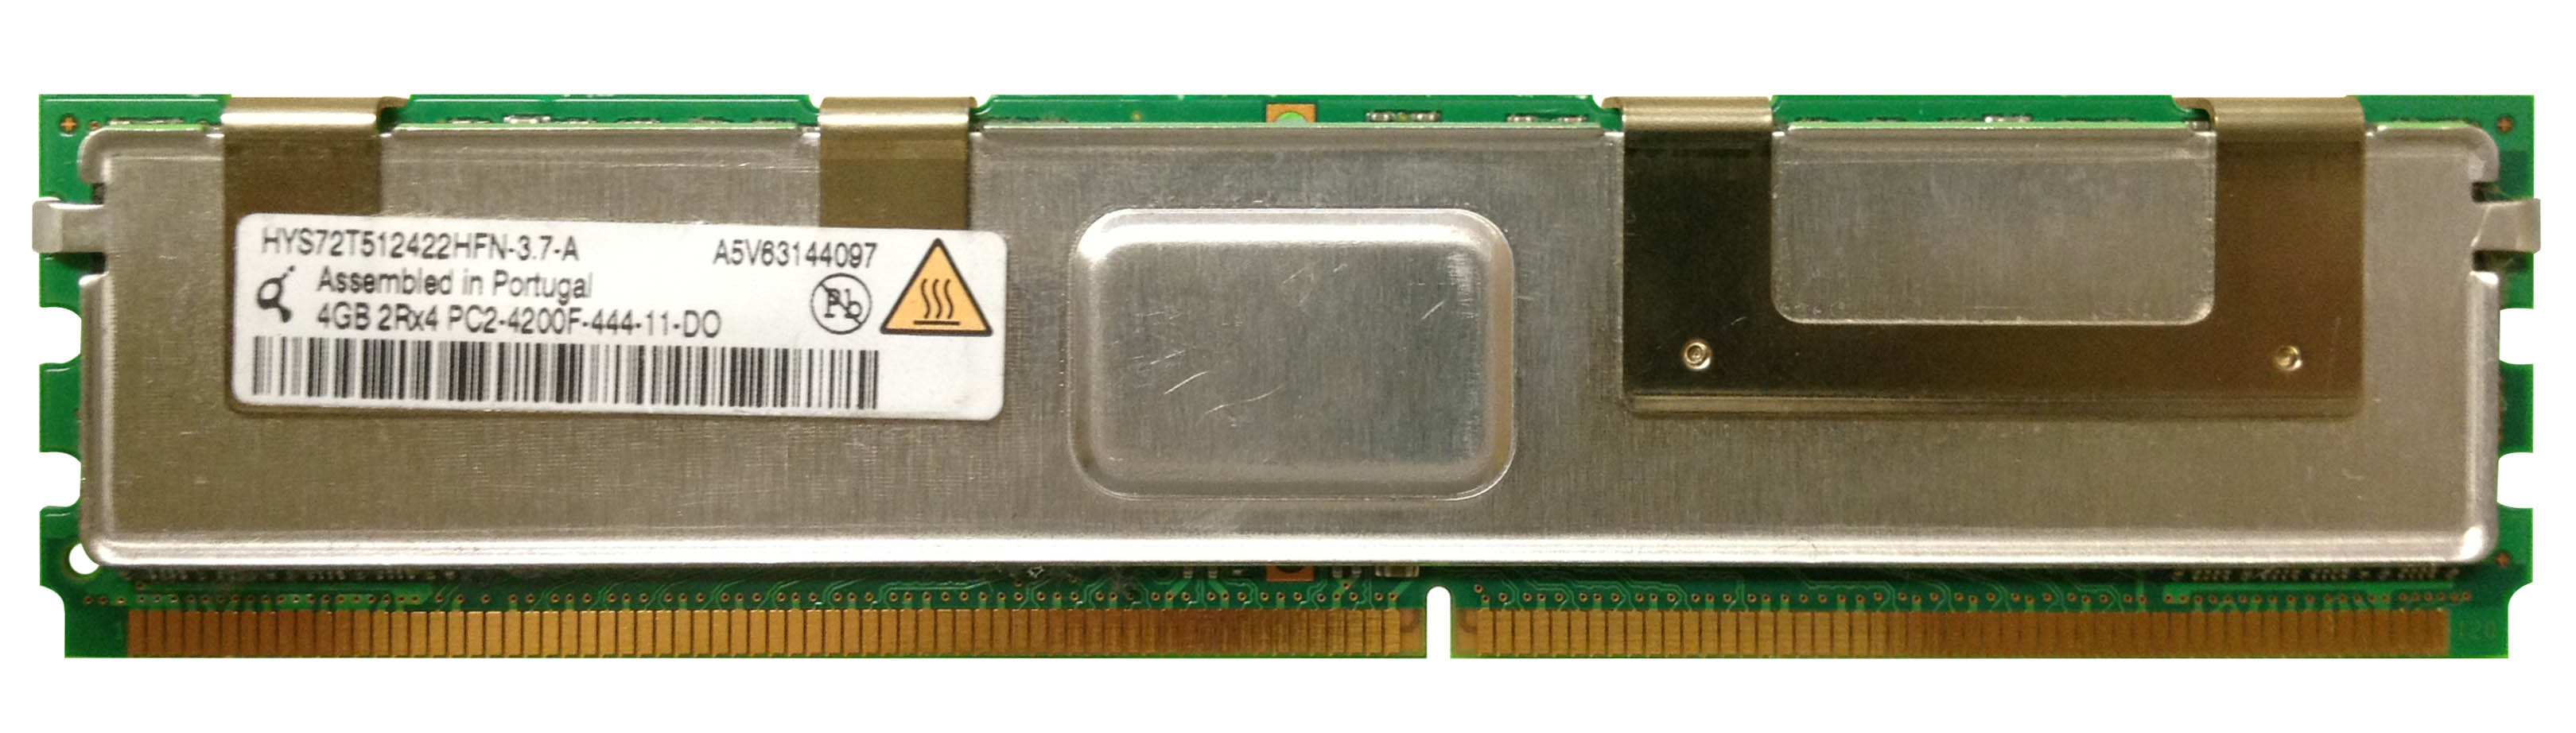 HYS72T512422HFN-3.7-A Qimonda 4GB PC2-4200 DDR2-533MHz ECC Fully Buffered CL4 240-Pin DIMM Dual Rank Memory Module